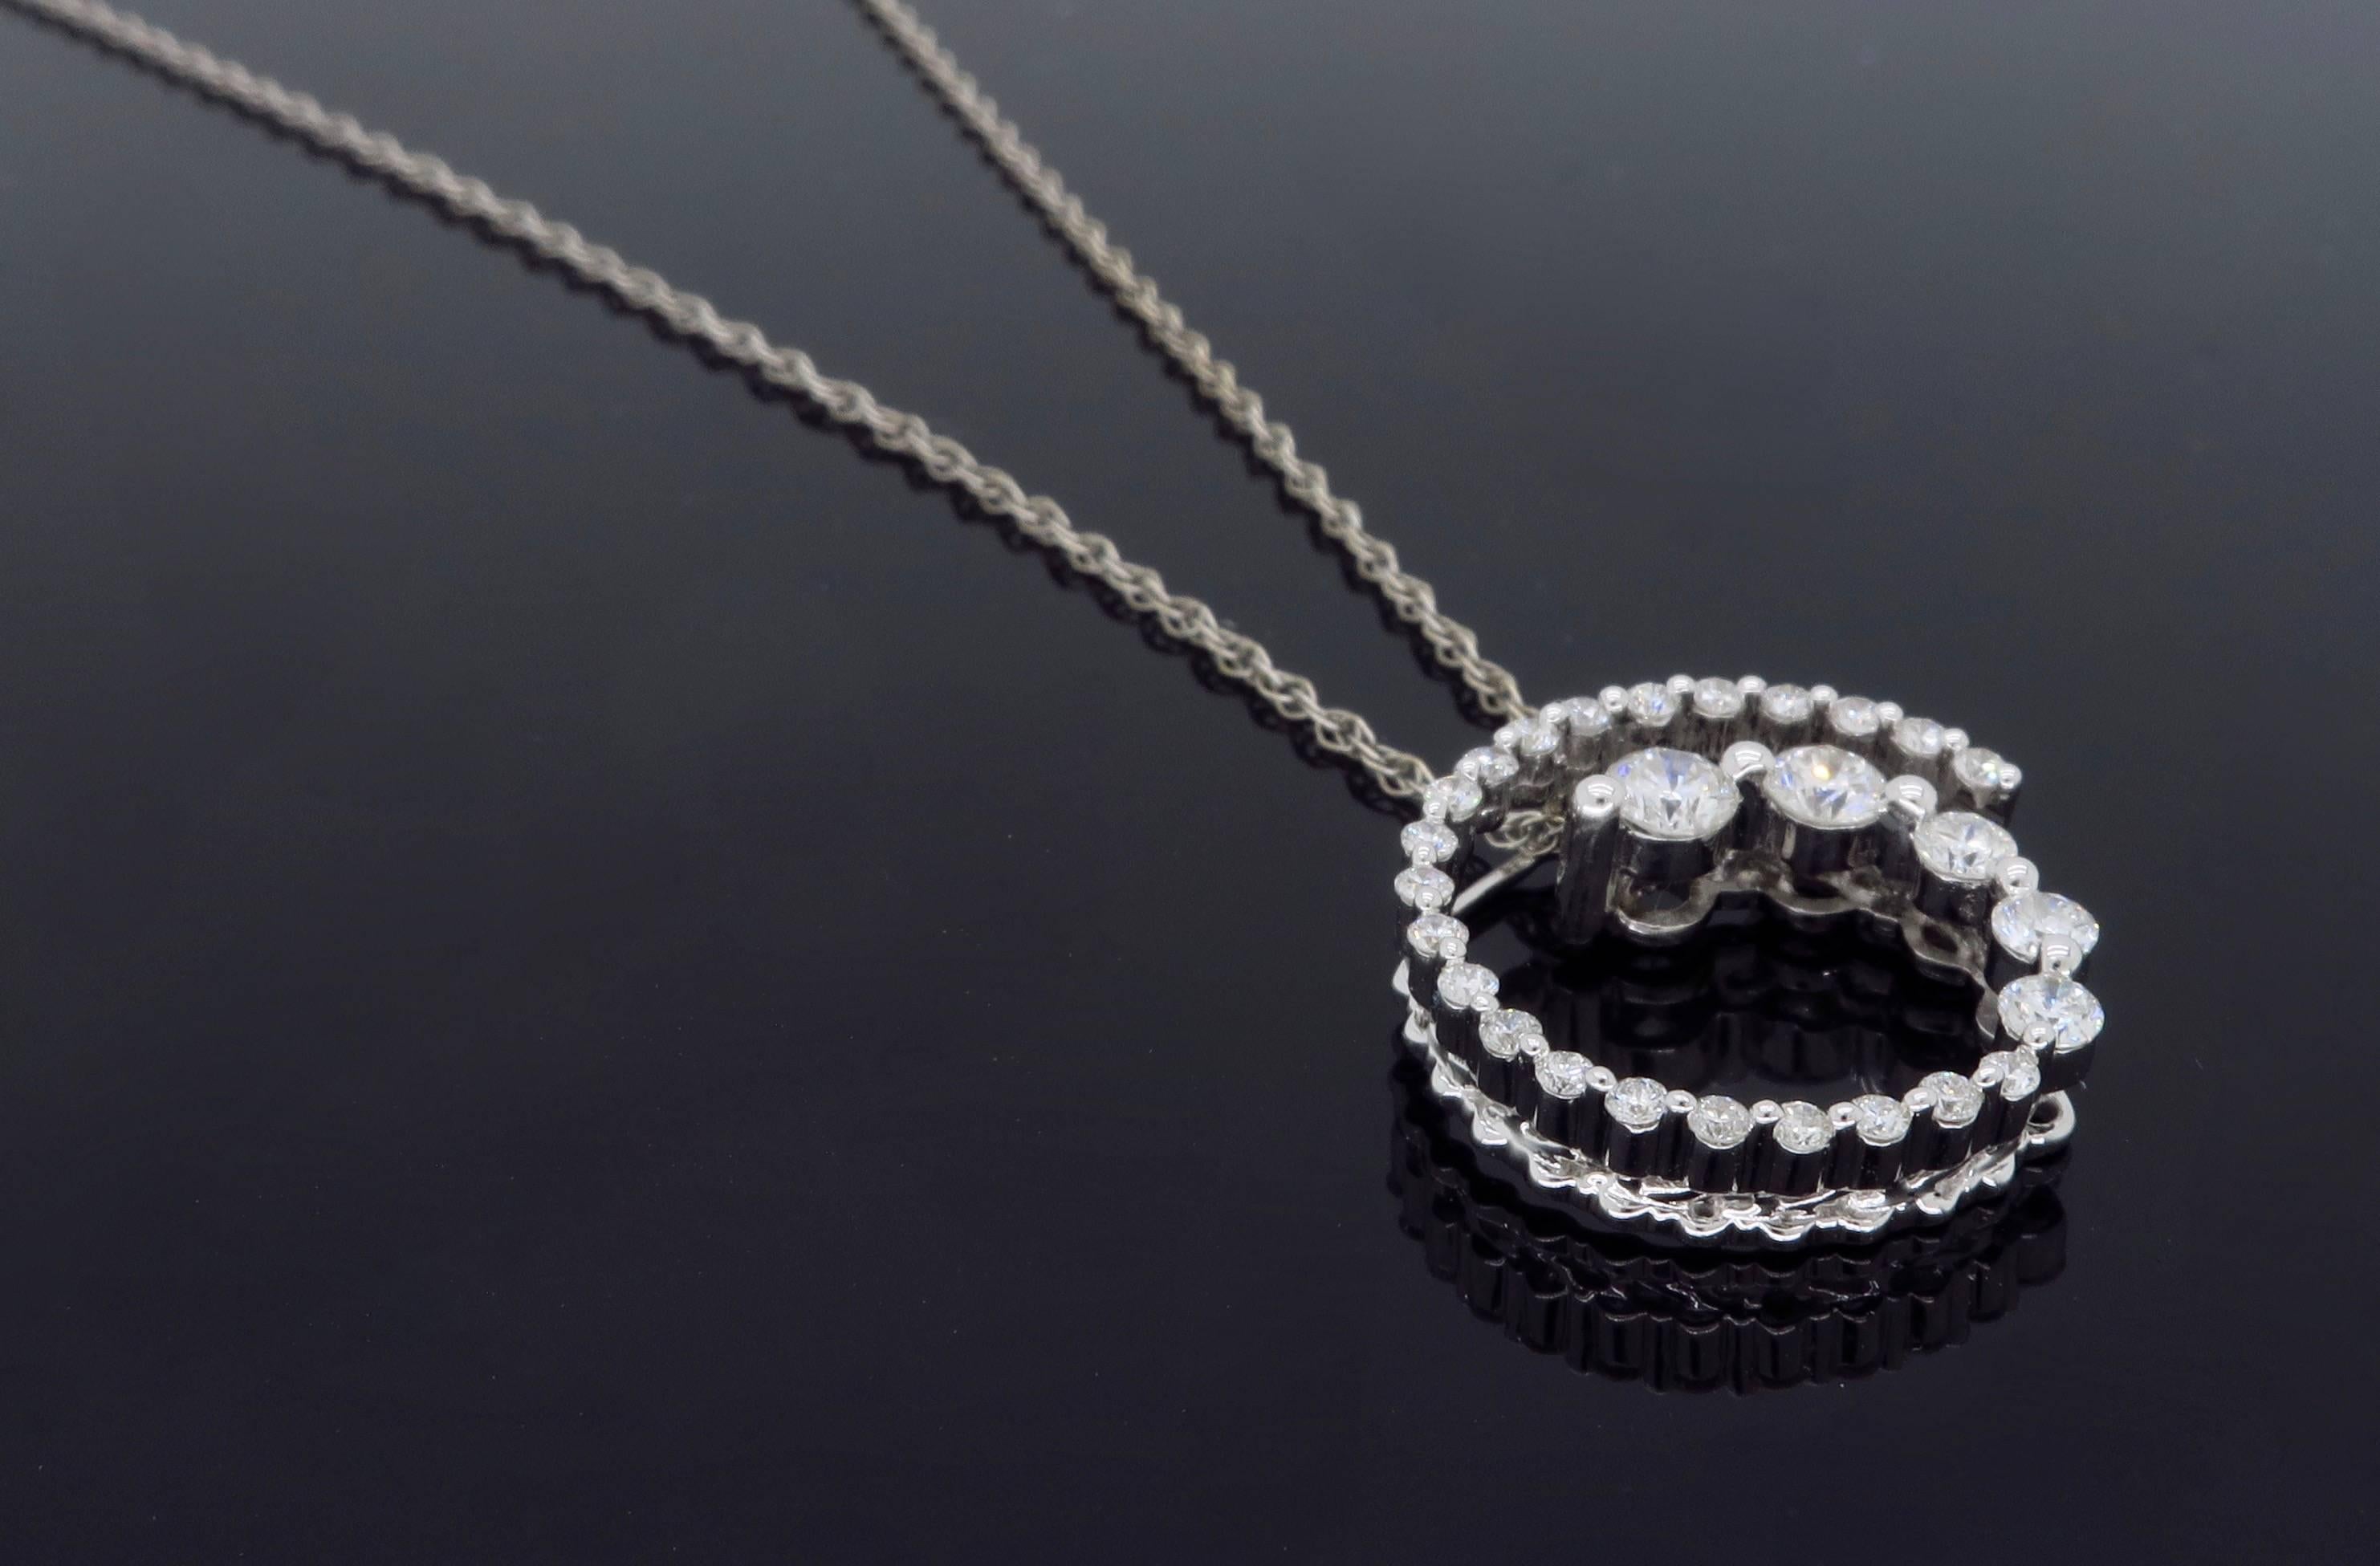  Diamond White Gold Pendant Chain Necklace  6